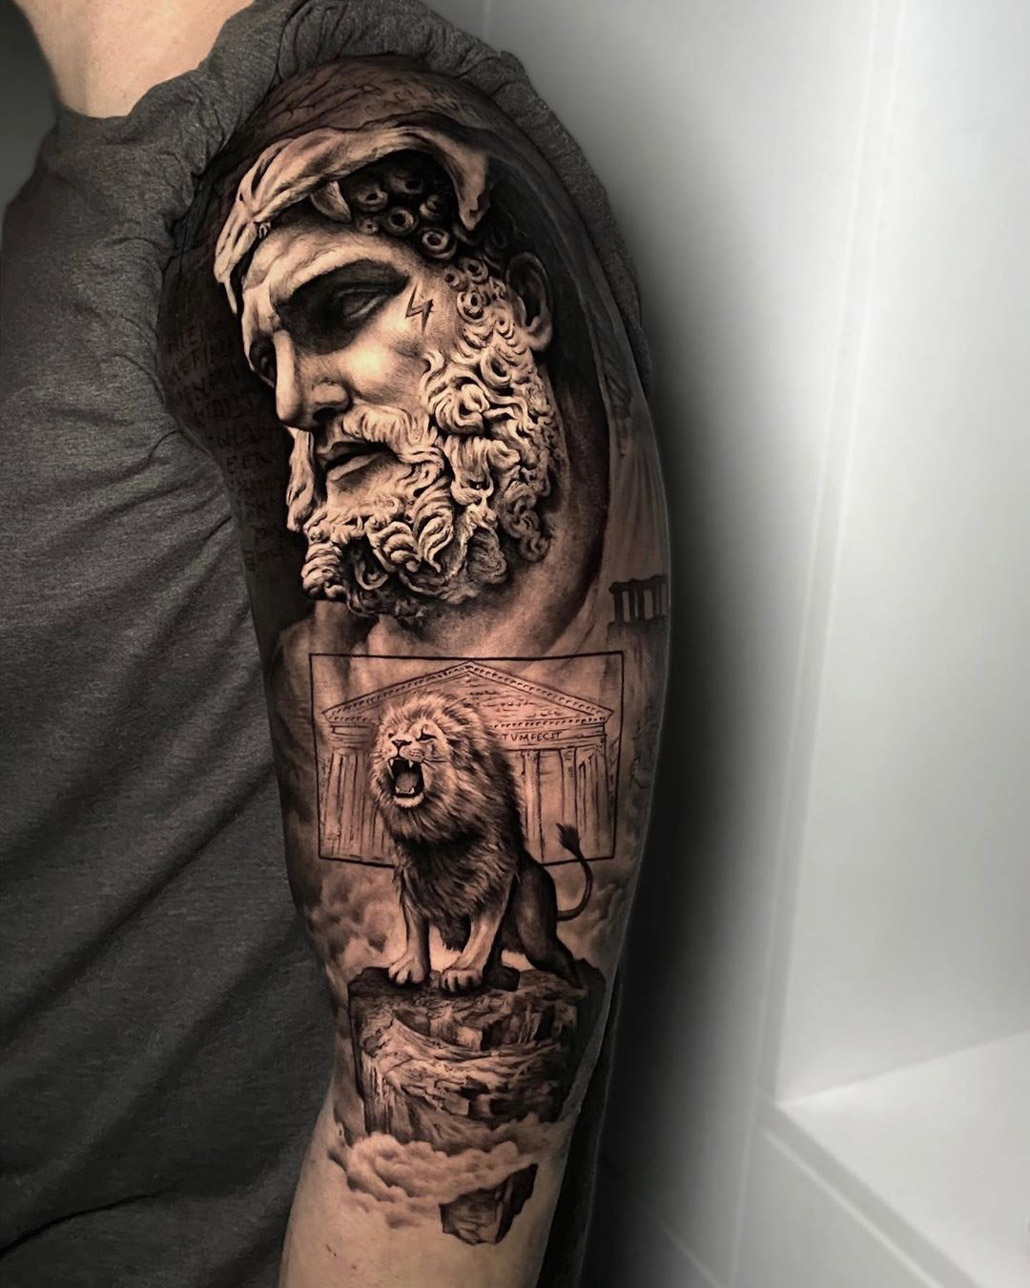 10 Best Hercules and Lion Tattoo Designs  PetPress  Hercules tattoo  Zeus tattoo Greek mythology tattoos